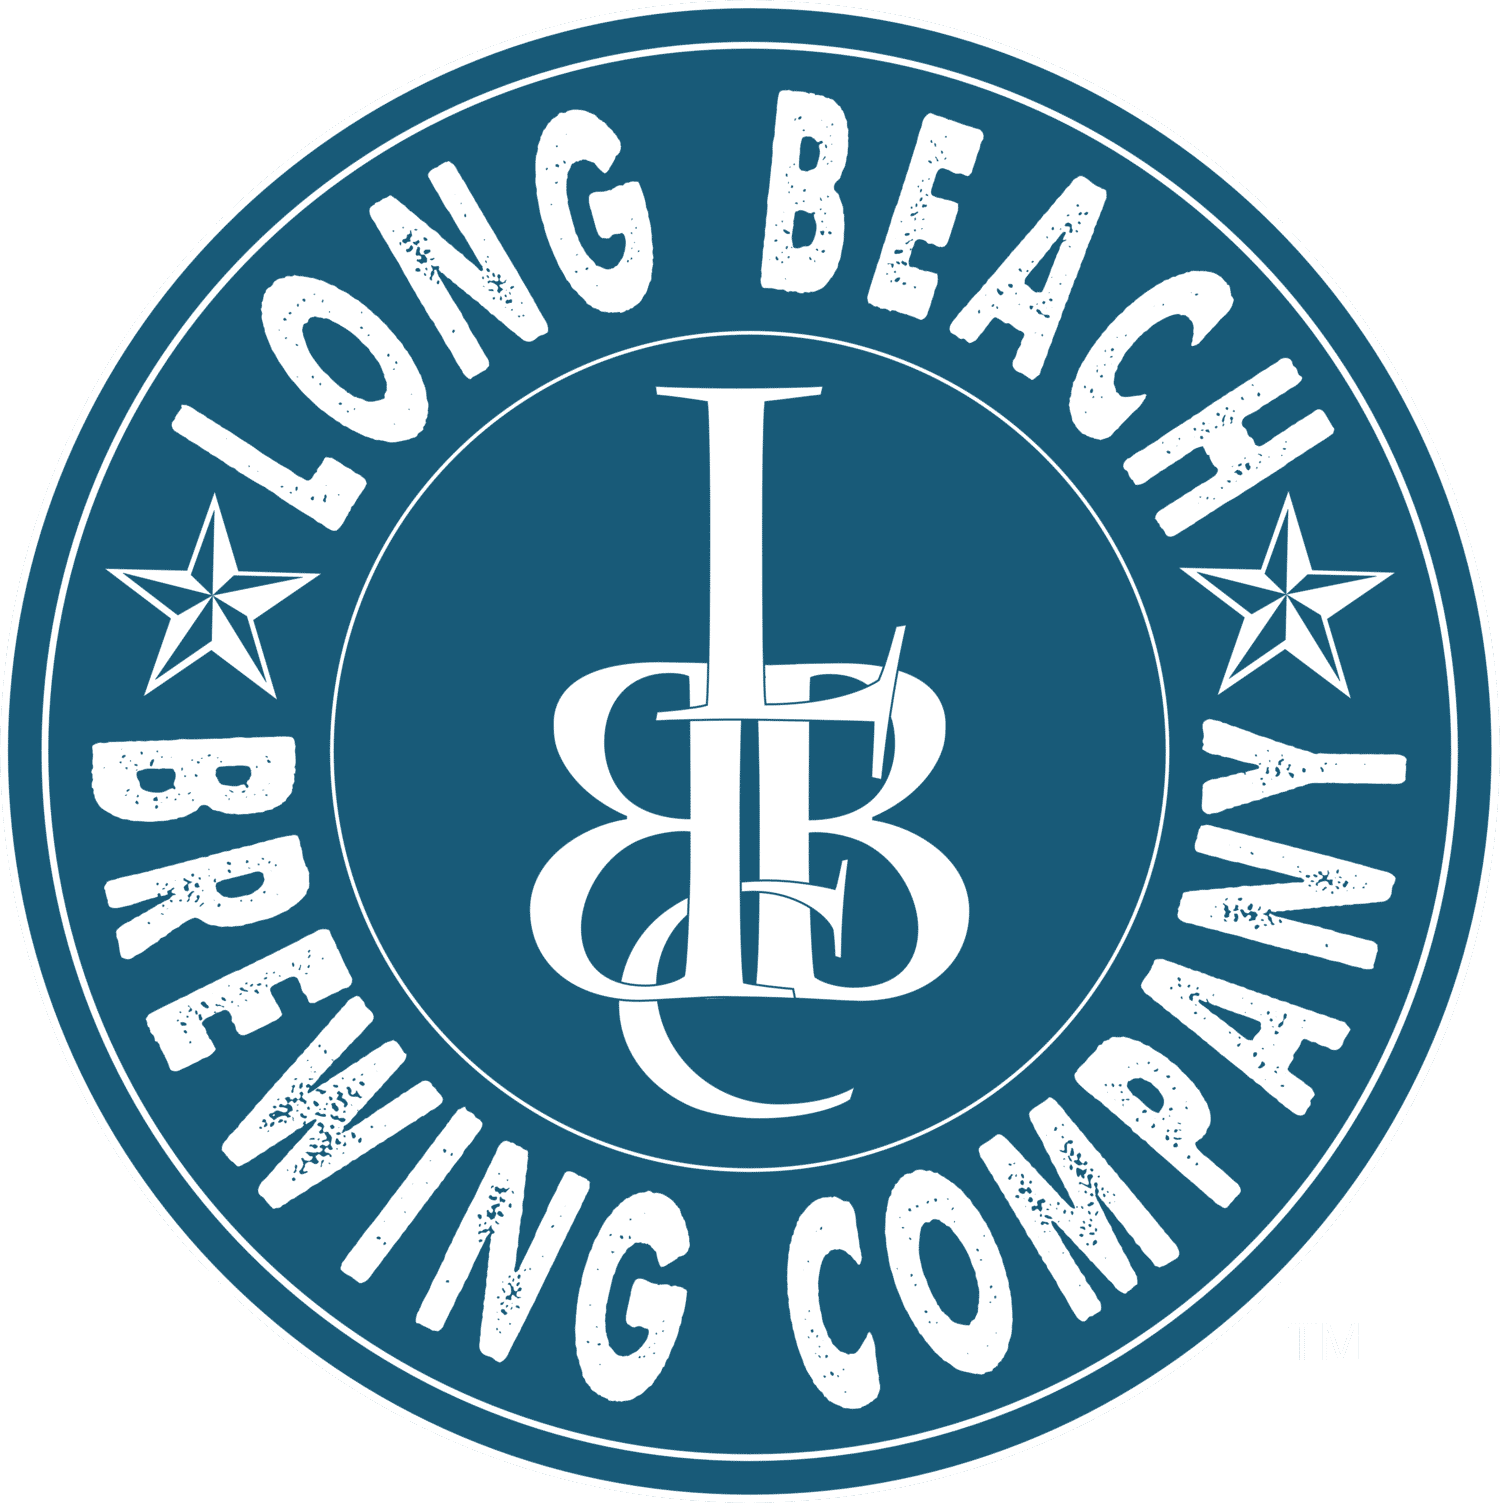 Long Beach Brewing Company